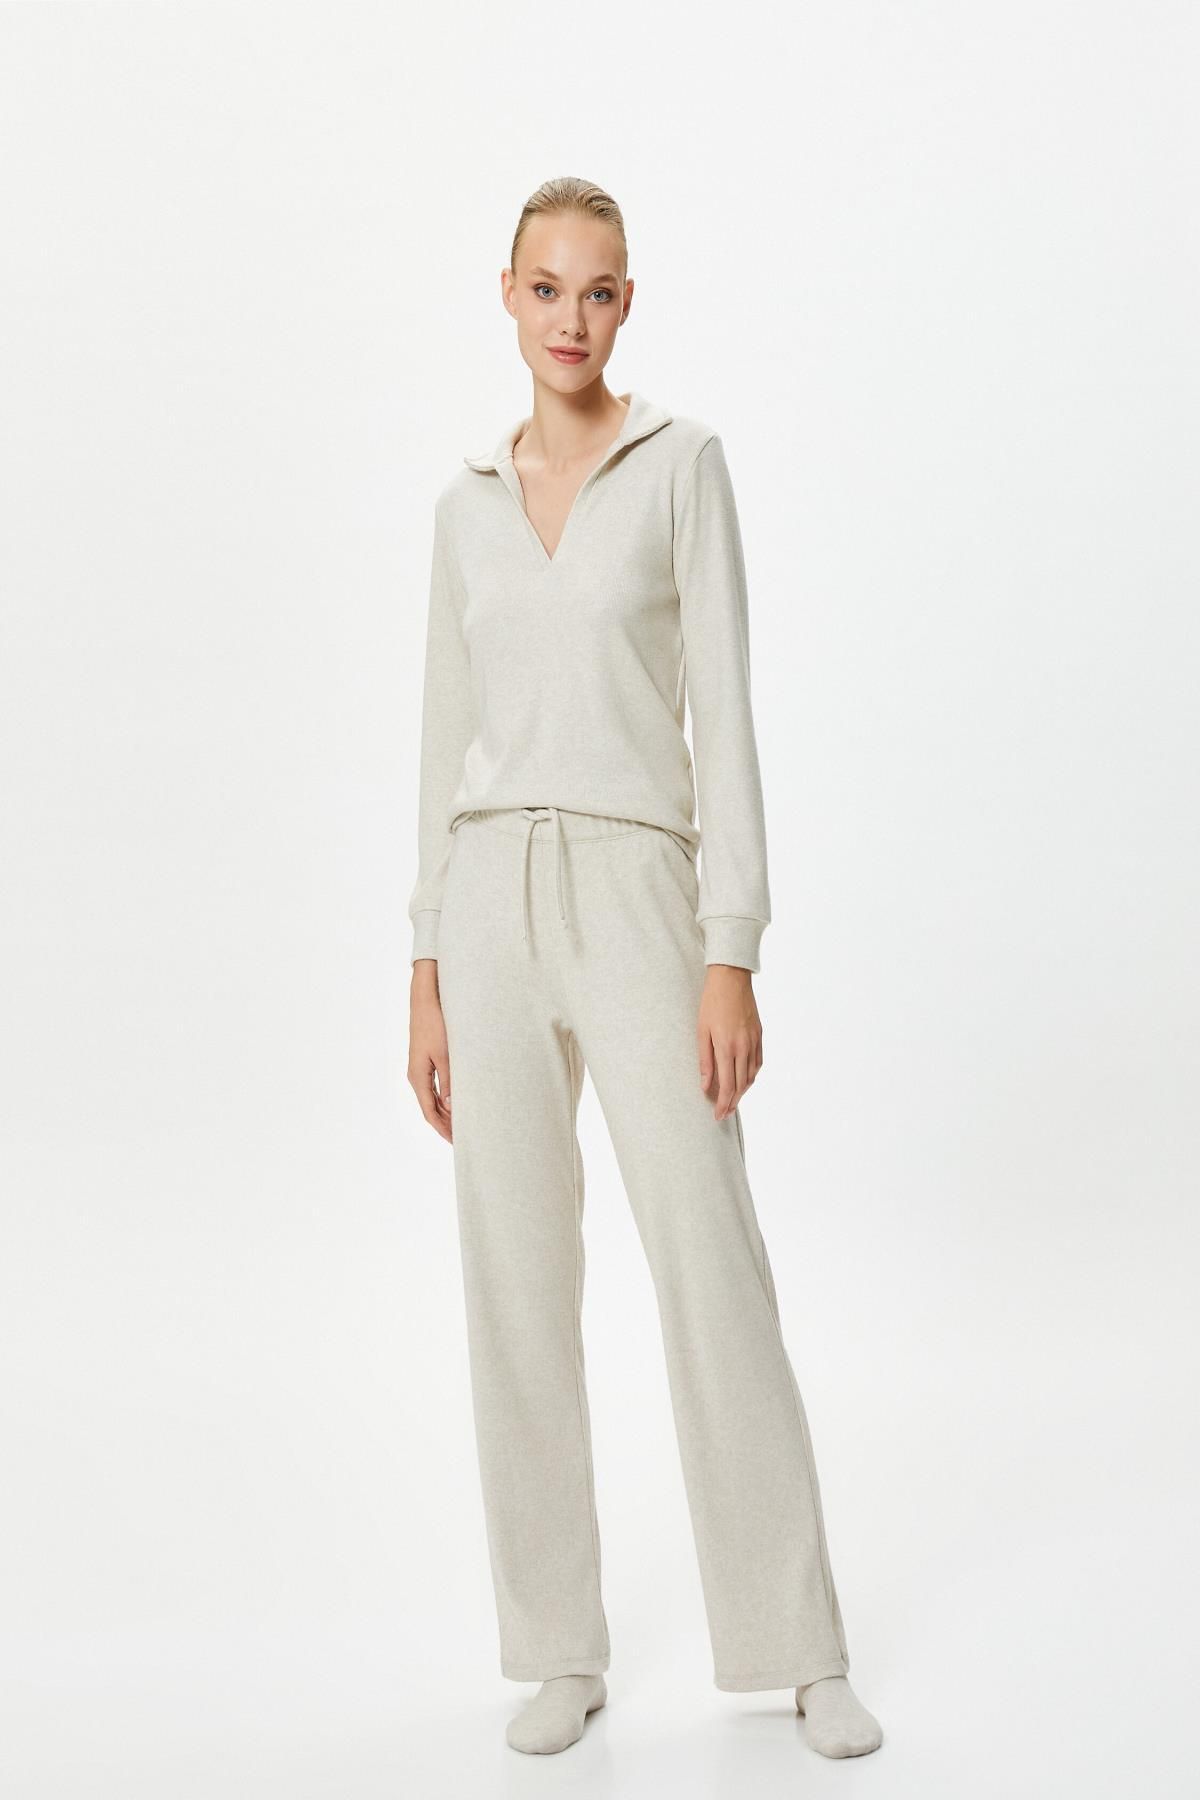 BAYKAR Young Girl's Cotton Crew Neck Printed Short Sleeve Capri Pajama Set  9226 Cream - Trendyol